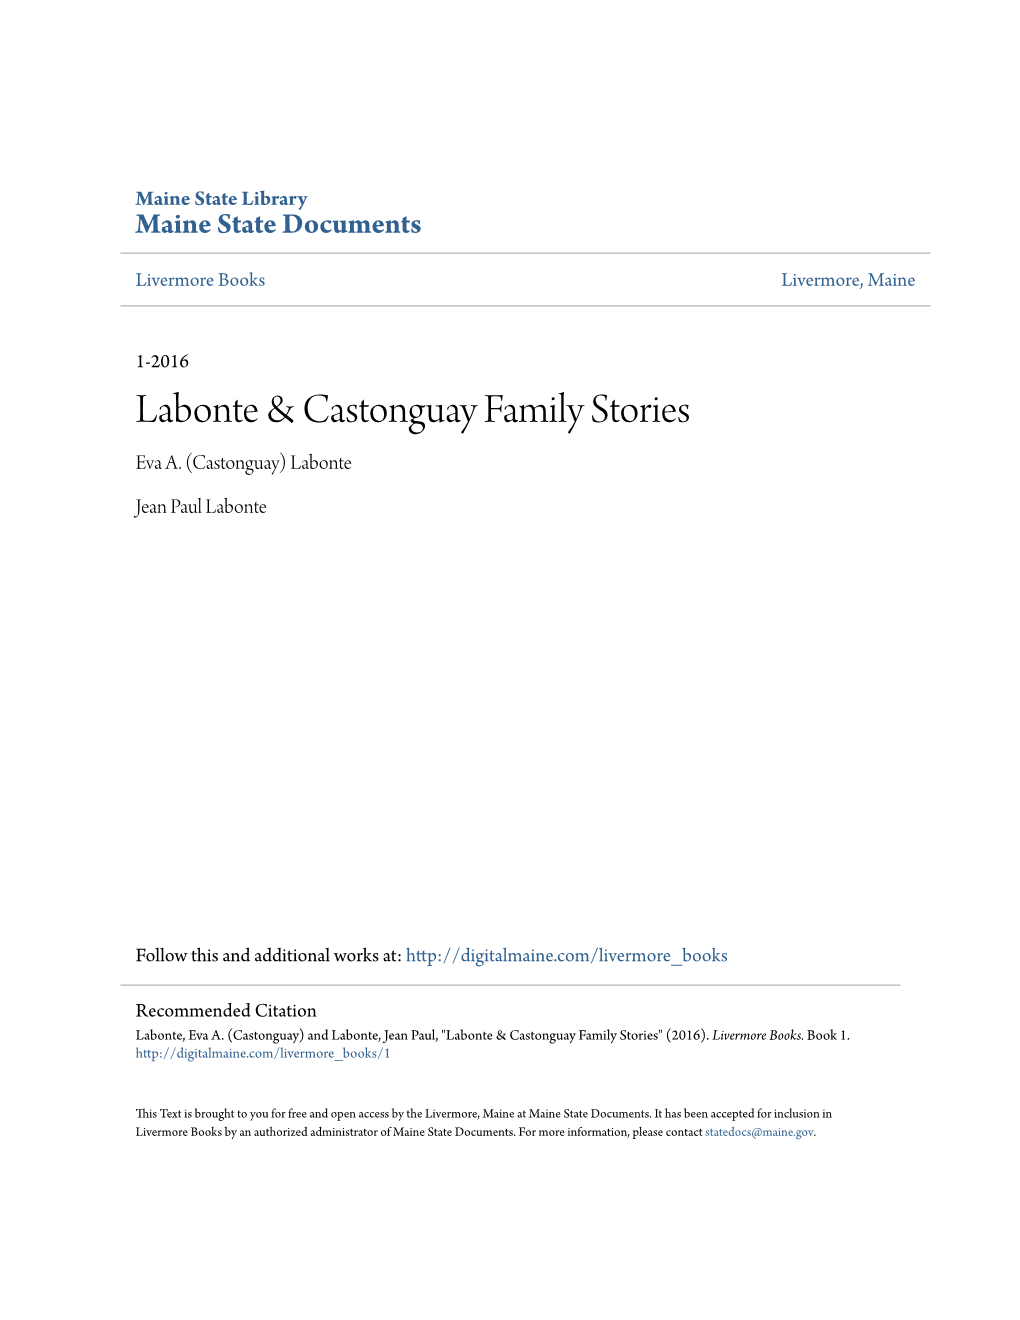 Labonte & Castonguay Family Stories